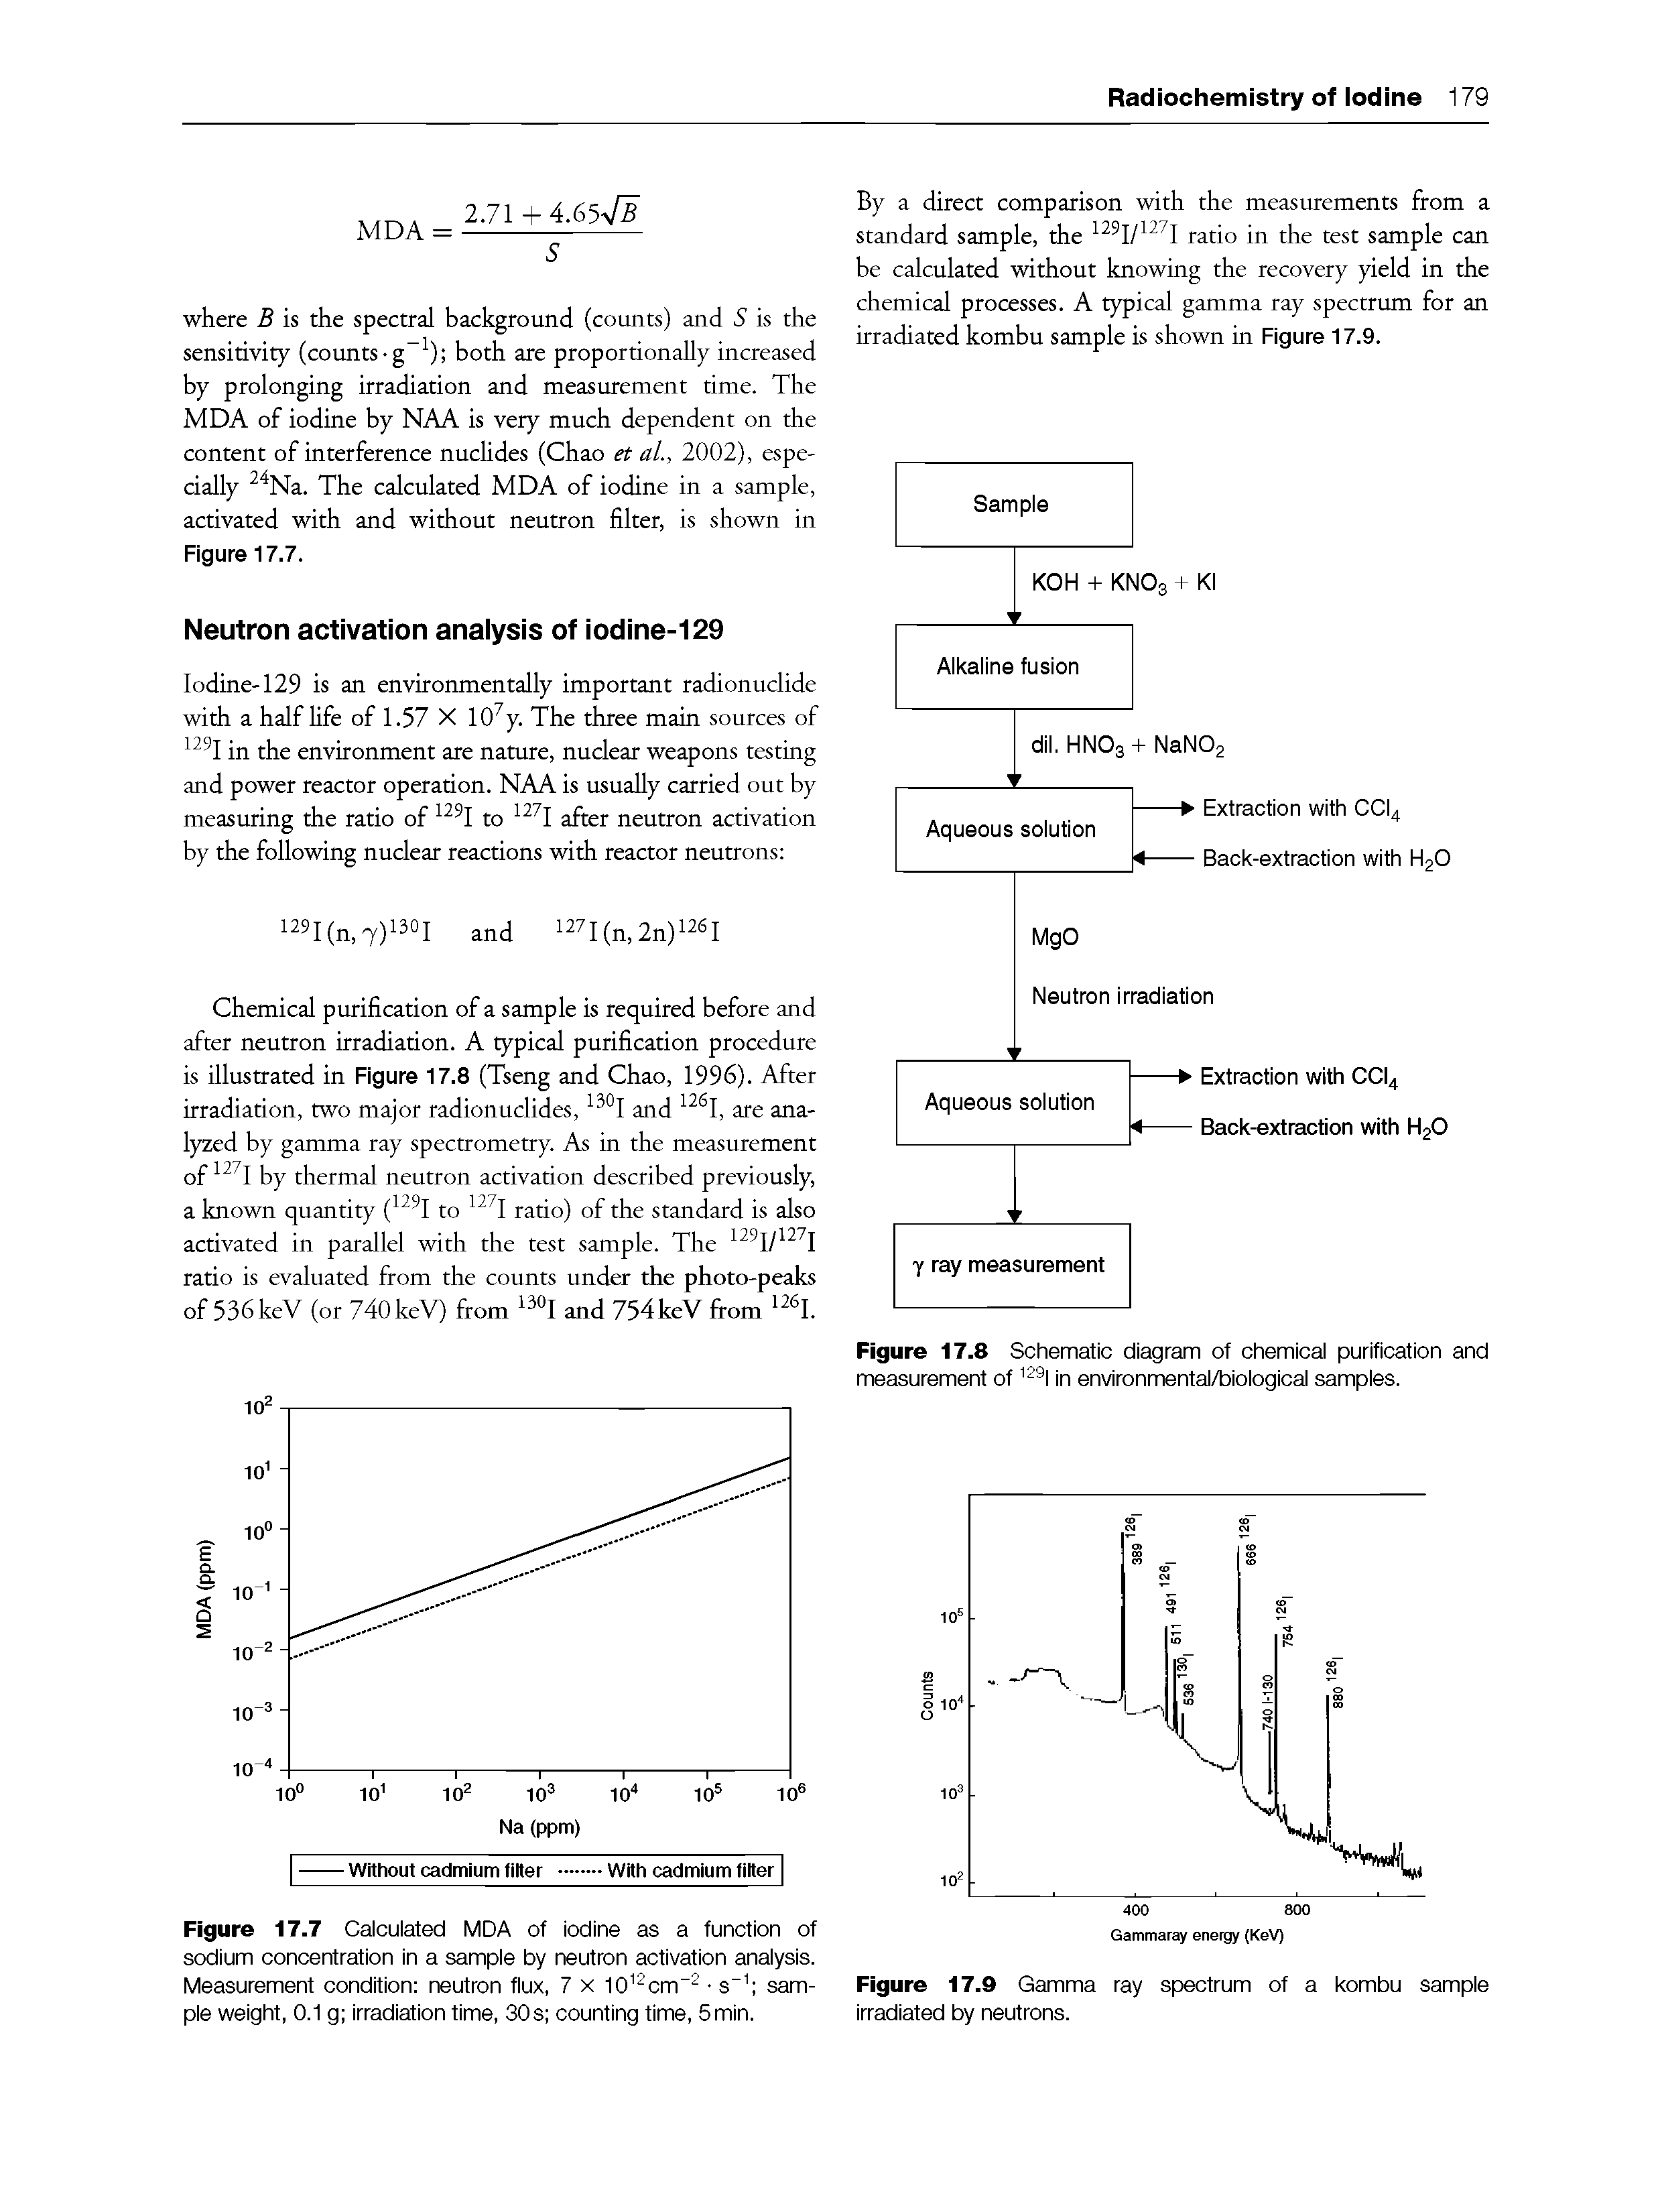 Figure 17.9 Gamma ray spectrum of a kombu sample irradiated by neutrons.